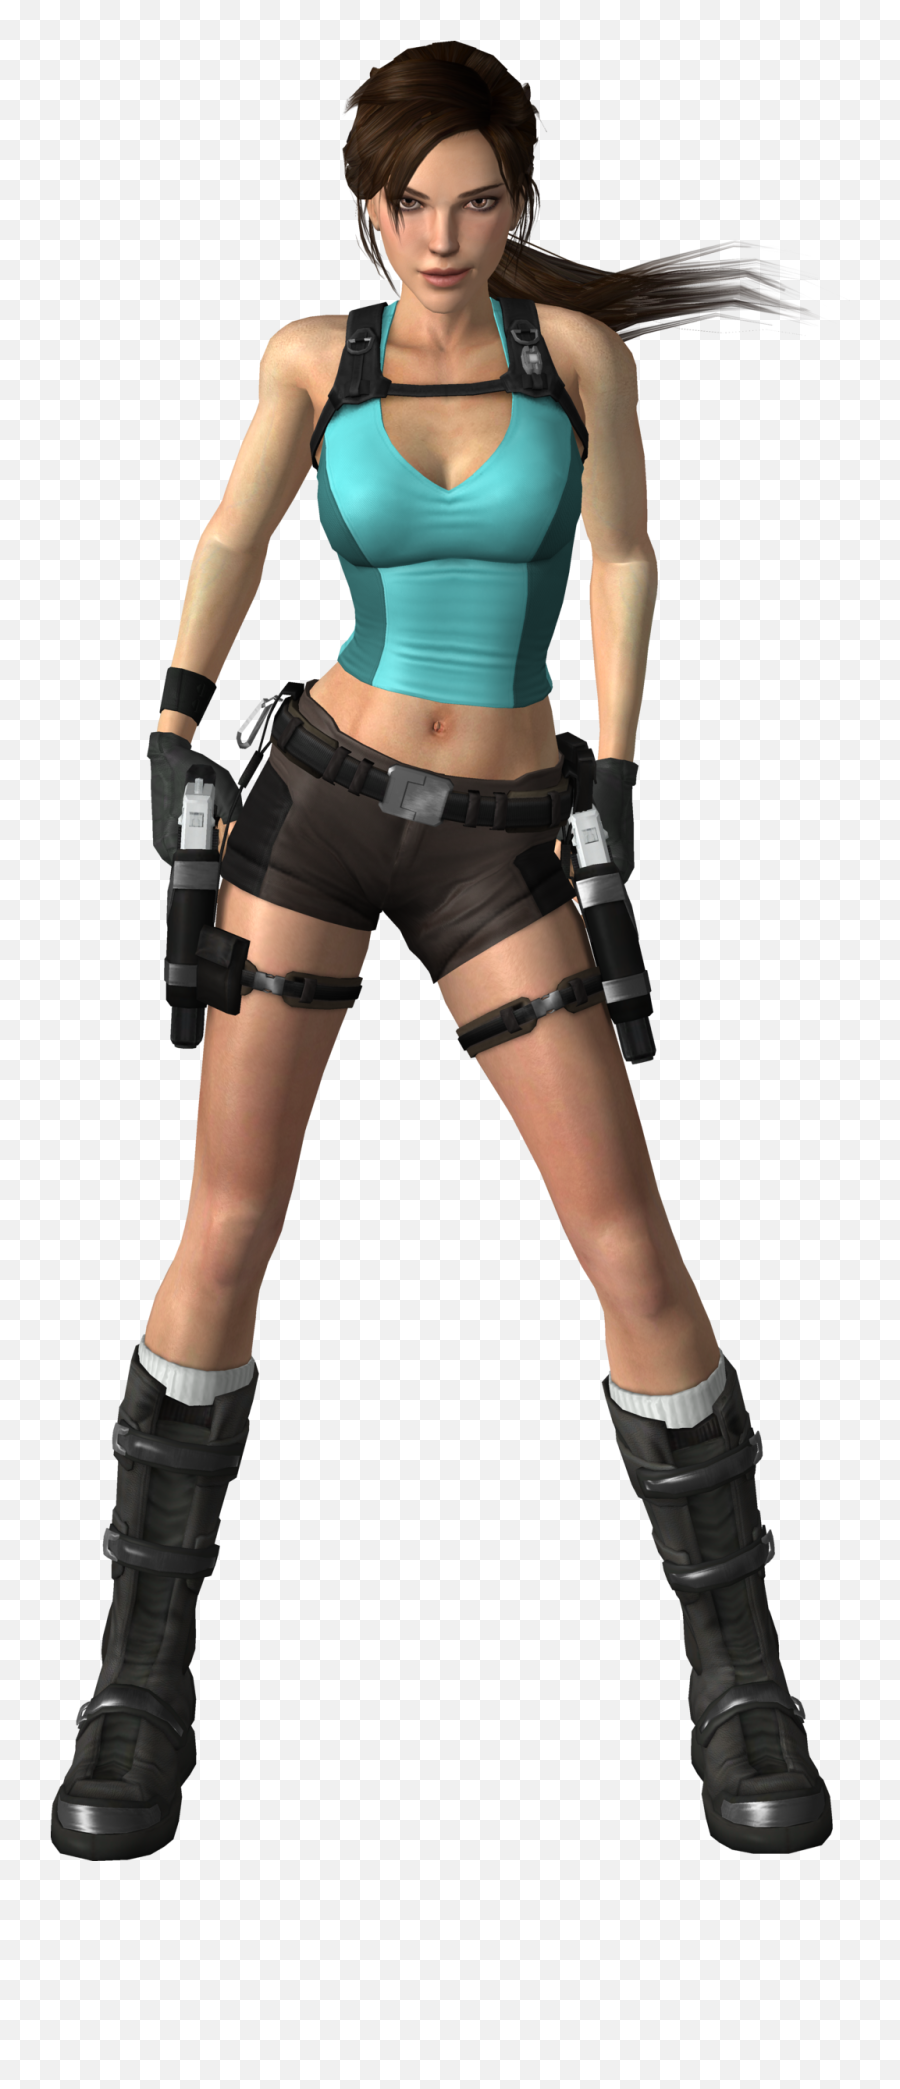 Lara Croft Png Photos - Smash Bros Lara Croft,Lara Croft Transparent